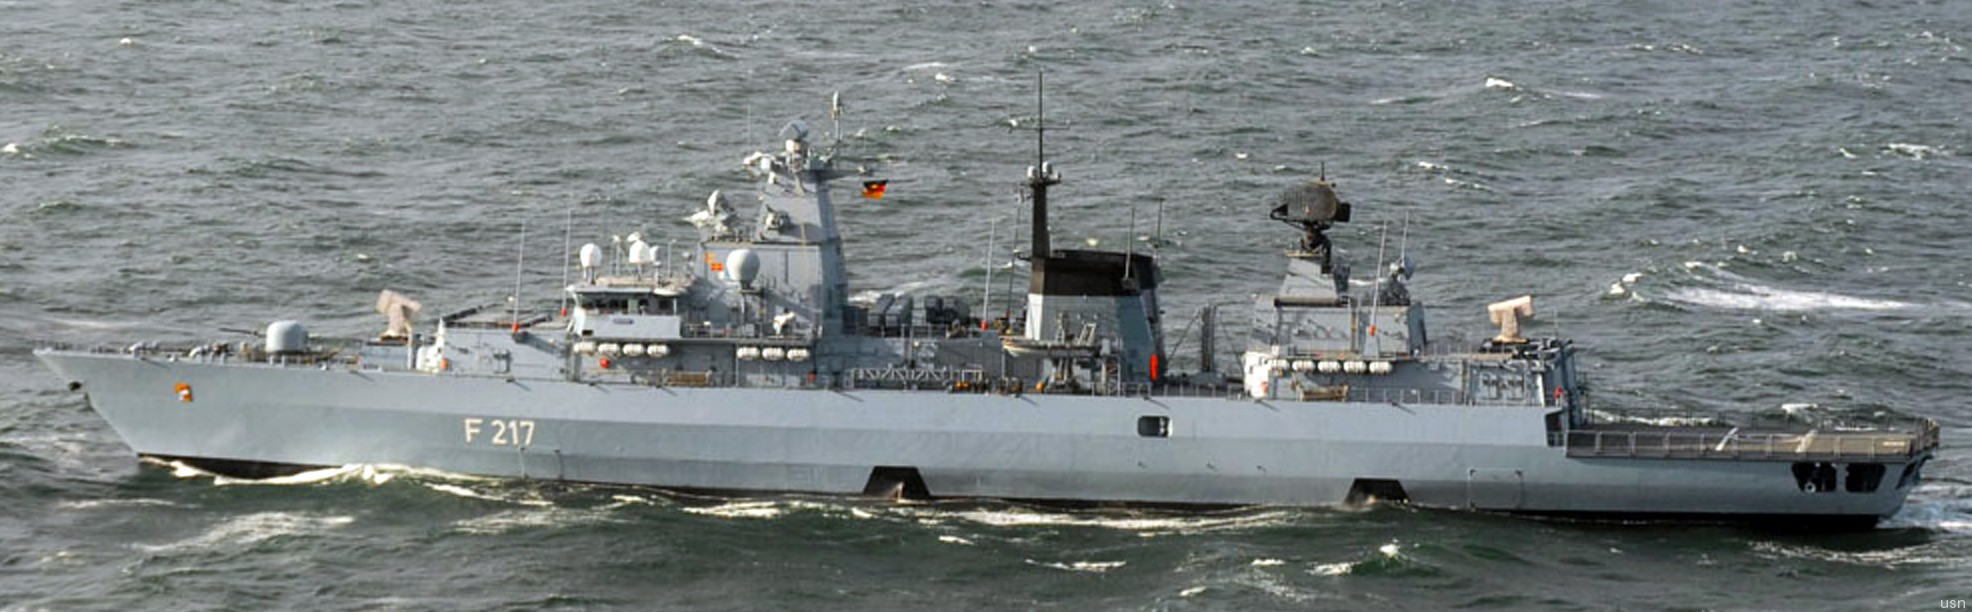 f-217 fgs bayern type 123 brandenburg class frigate german navy 11